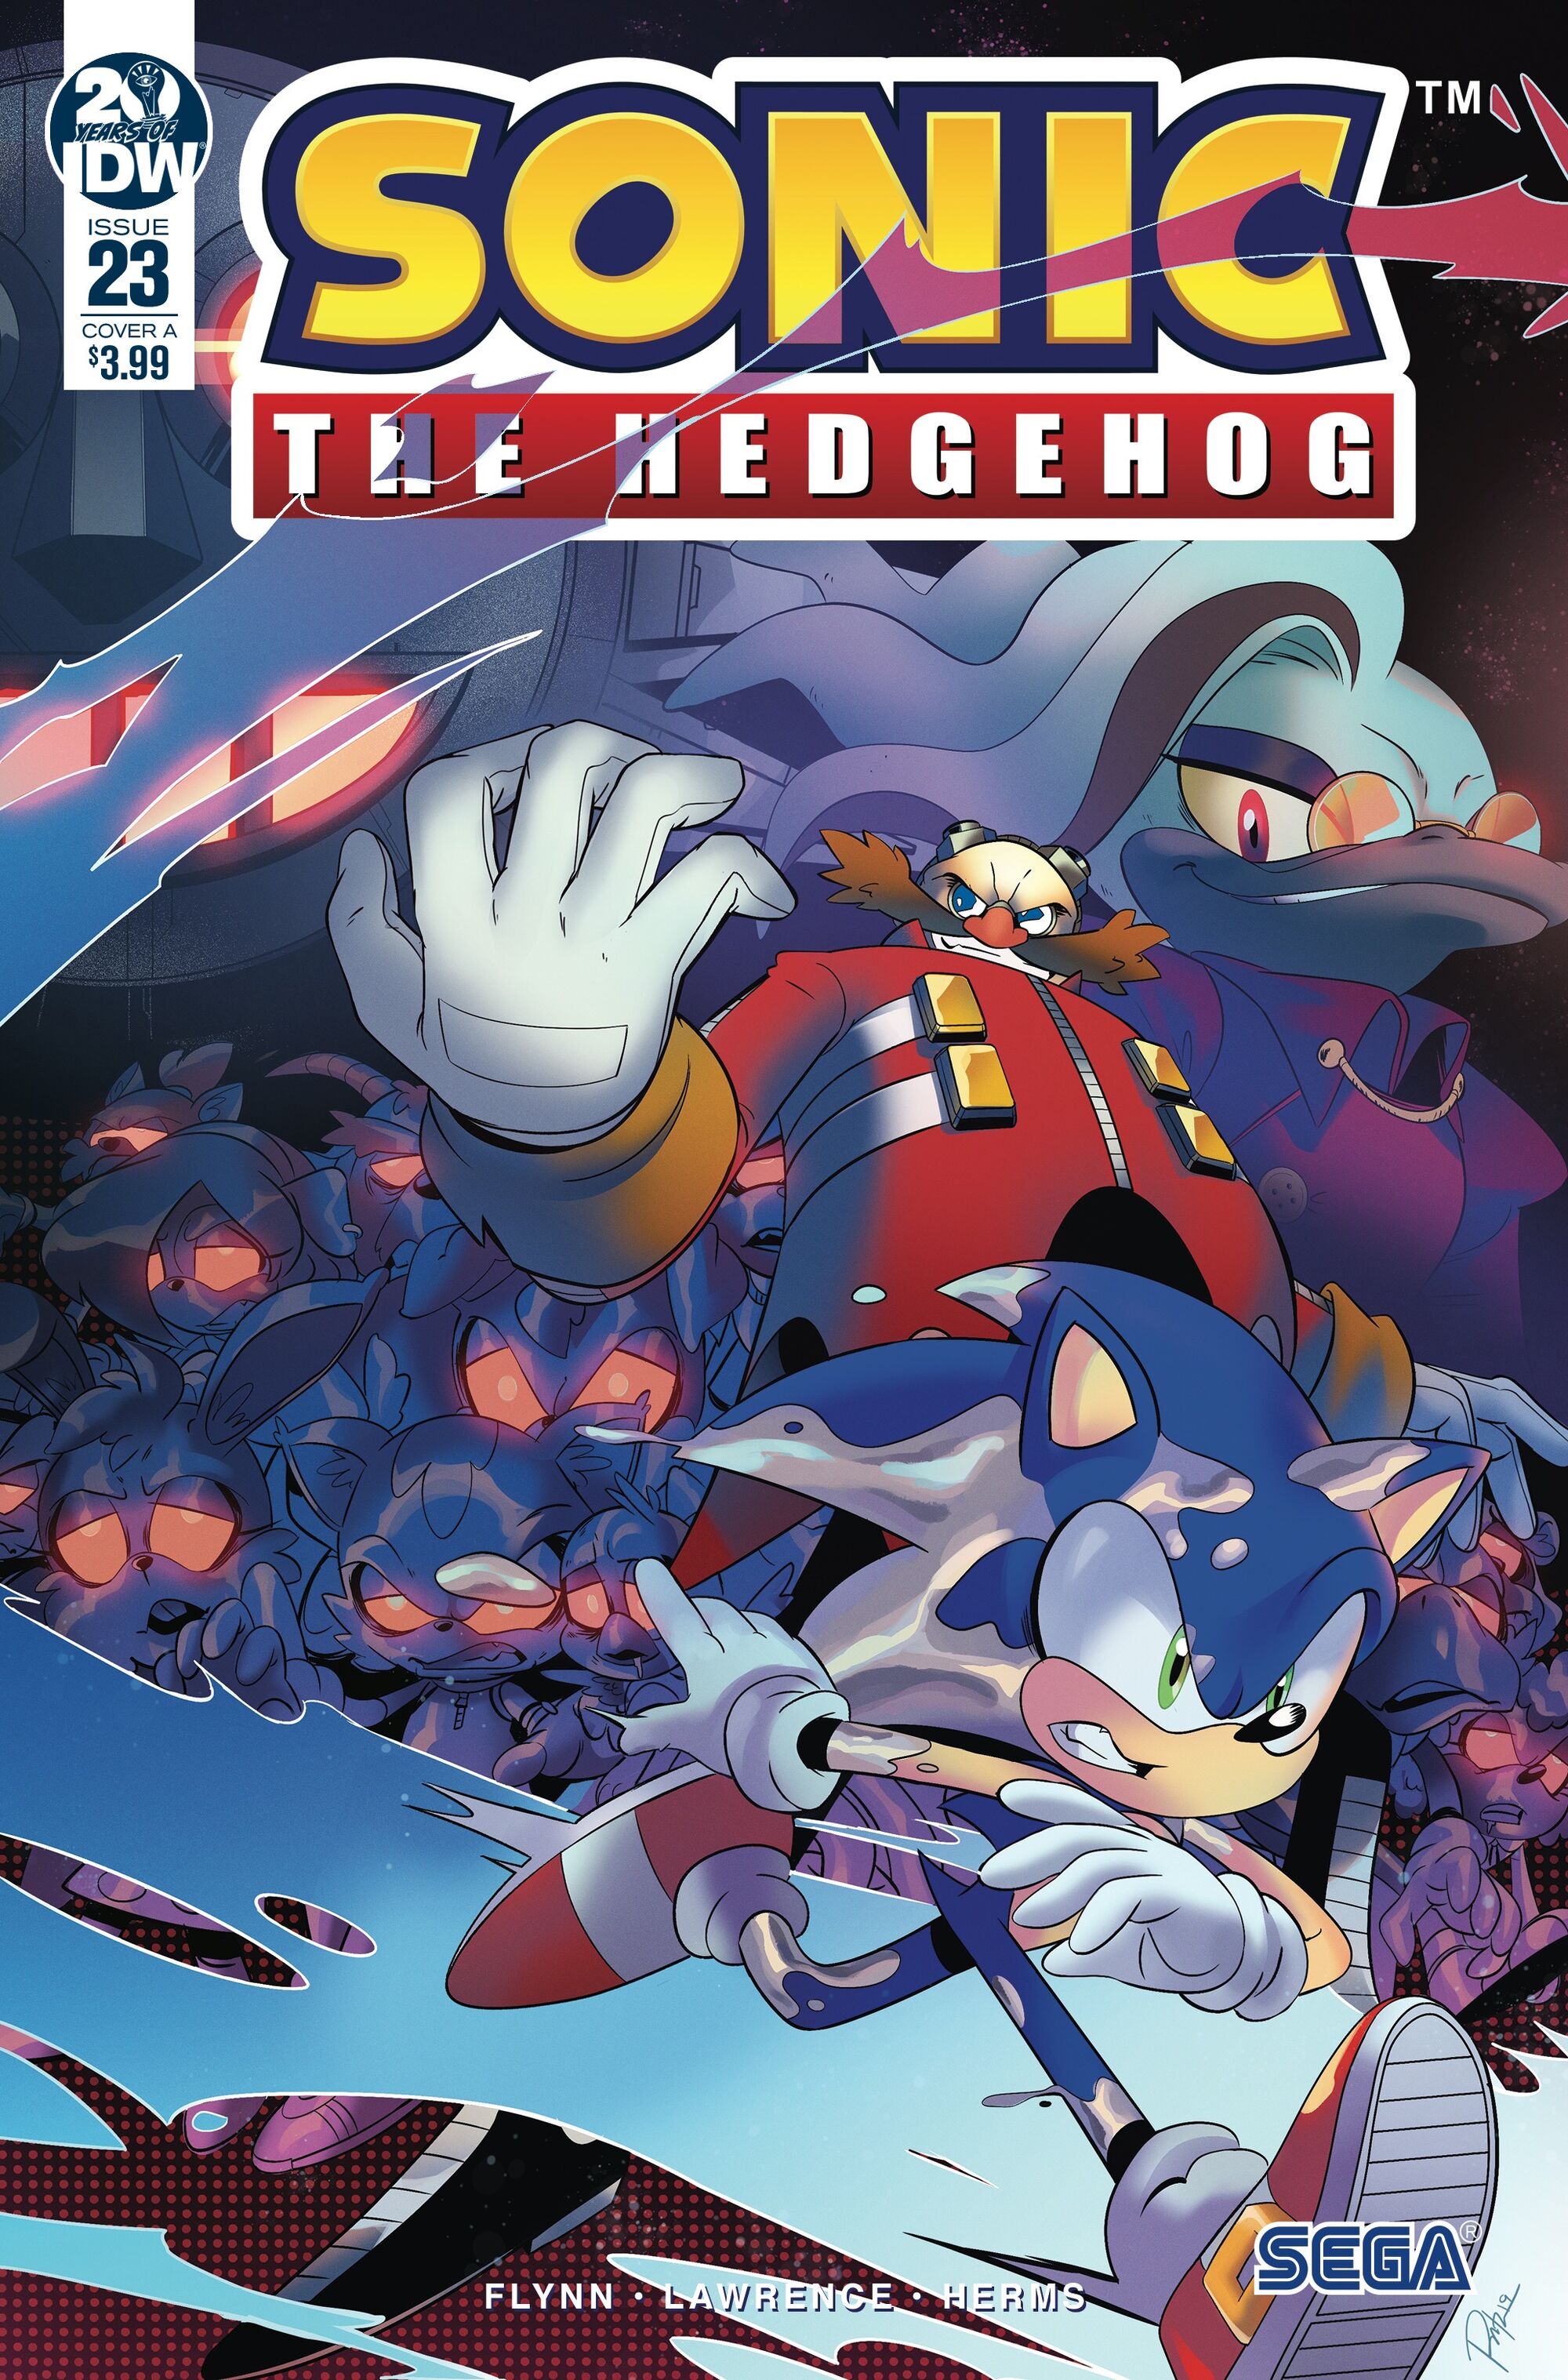 Idw Sonic The Hedgehog Issue 23 Sonic News Network Fandom